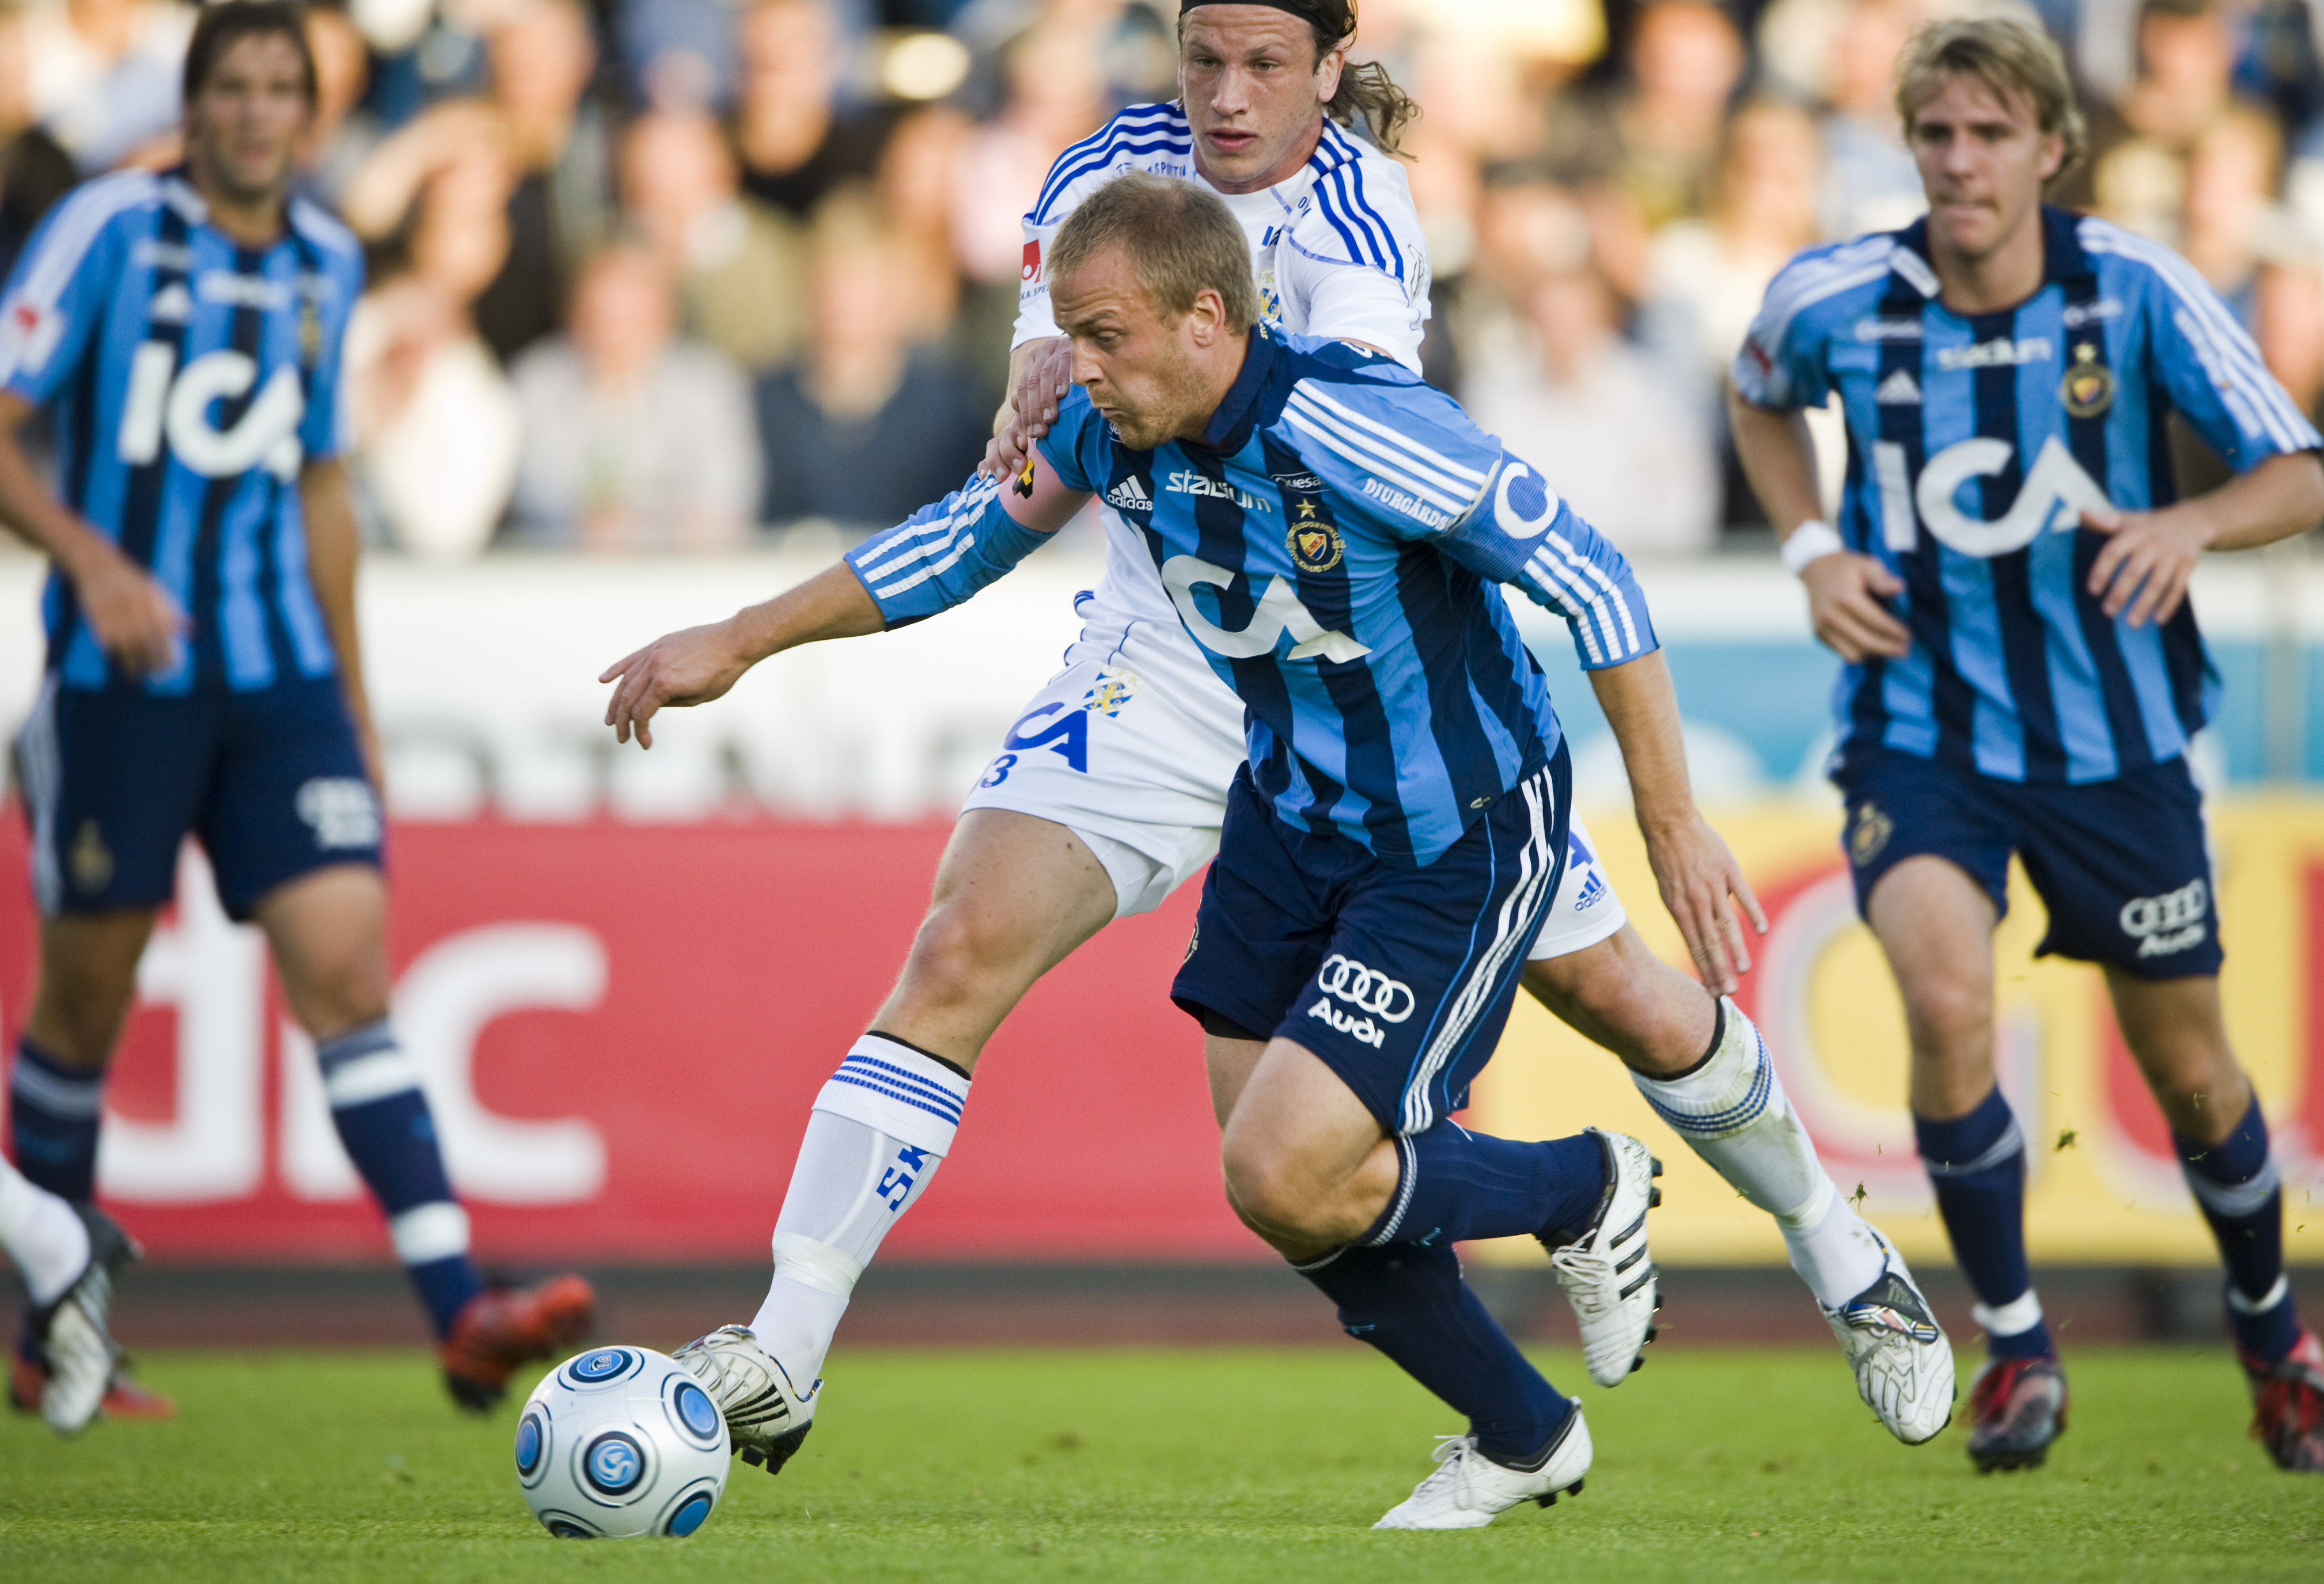 Dif, Allsvenskan, Stefan Pettersson